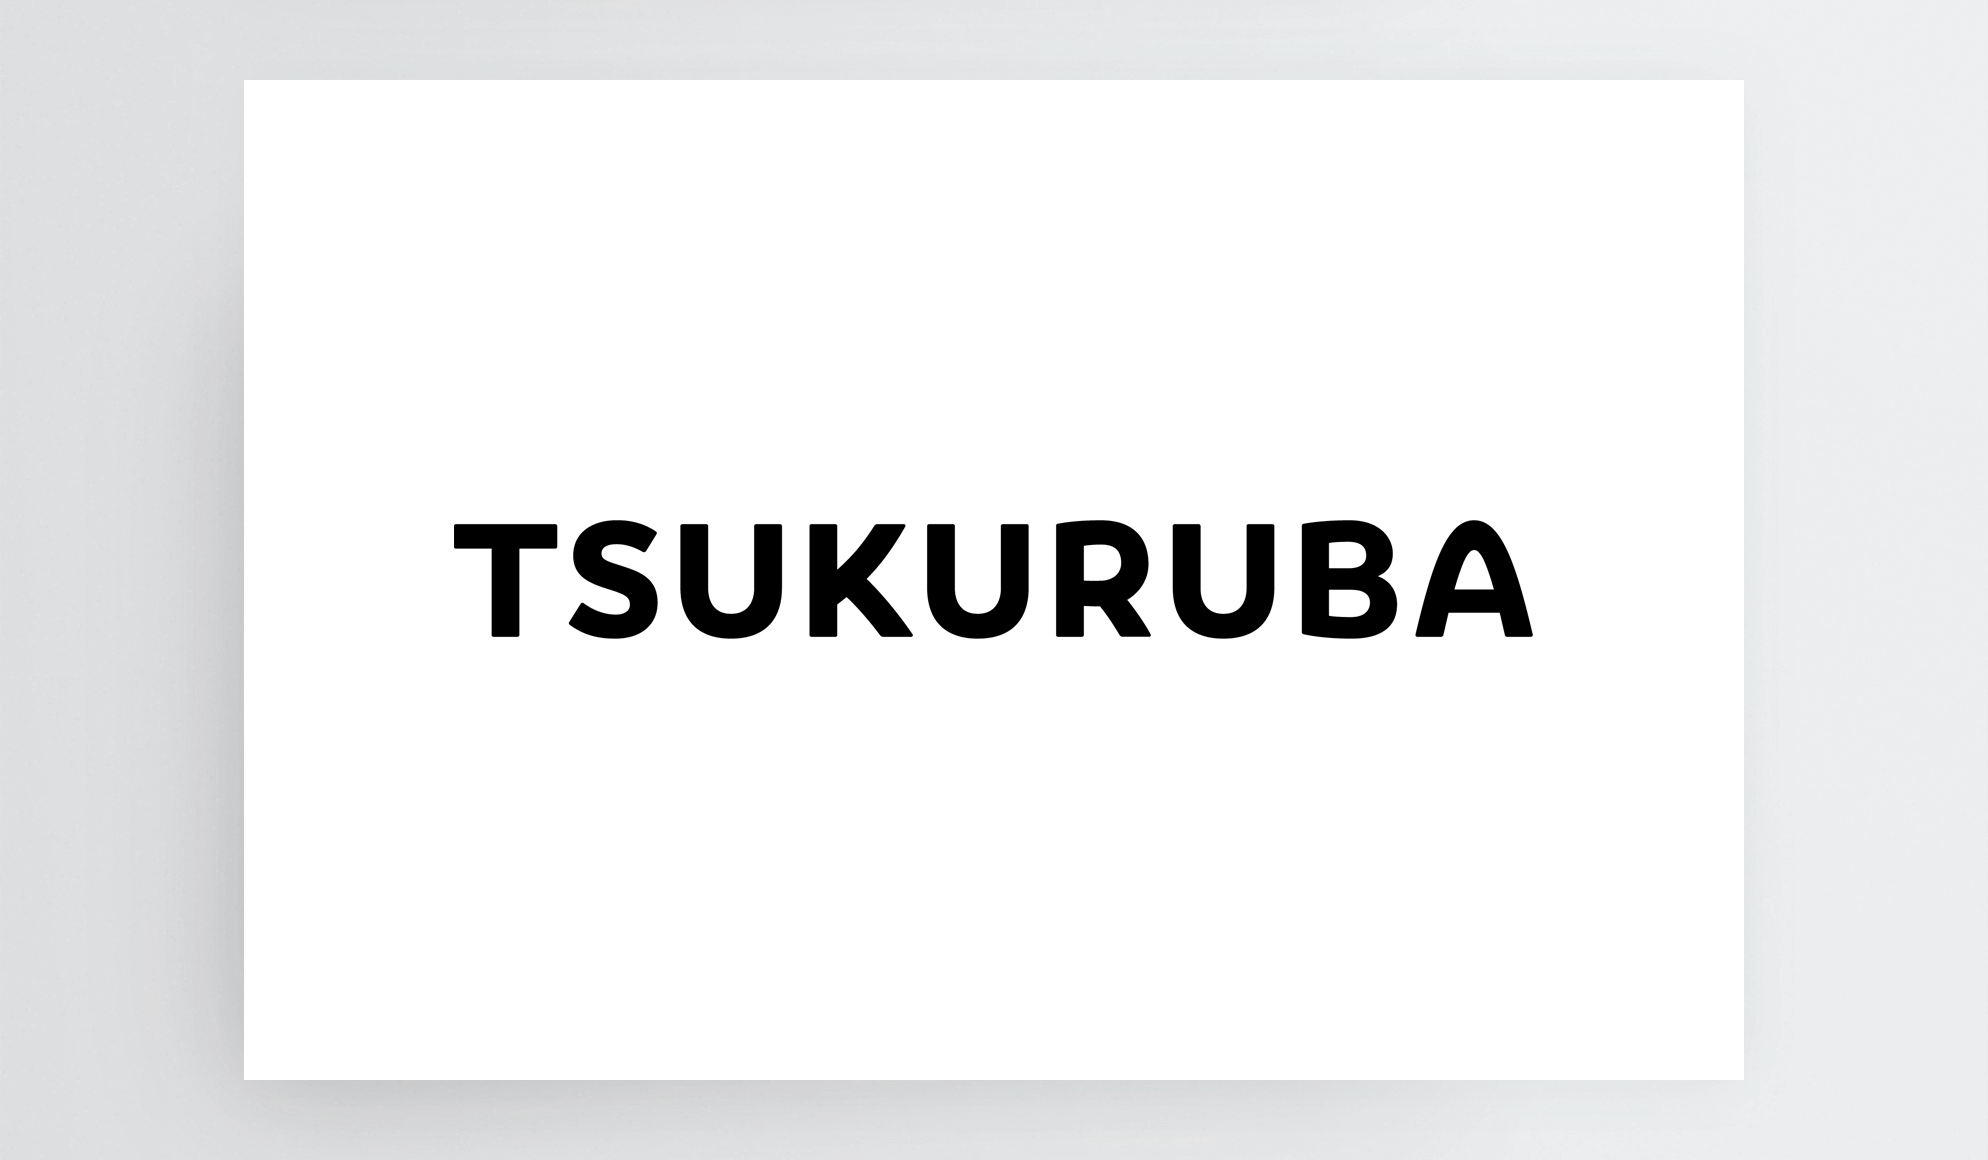 TSUKURUBA Logotype